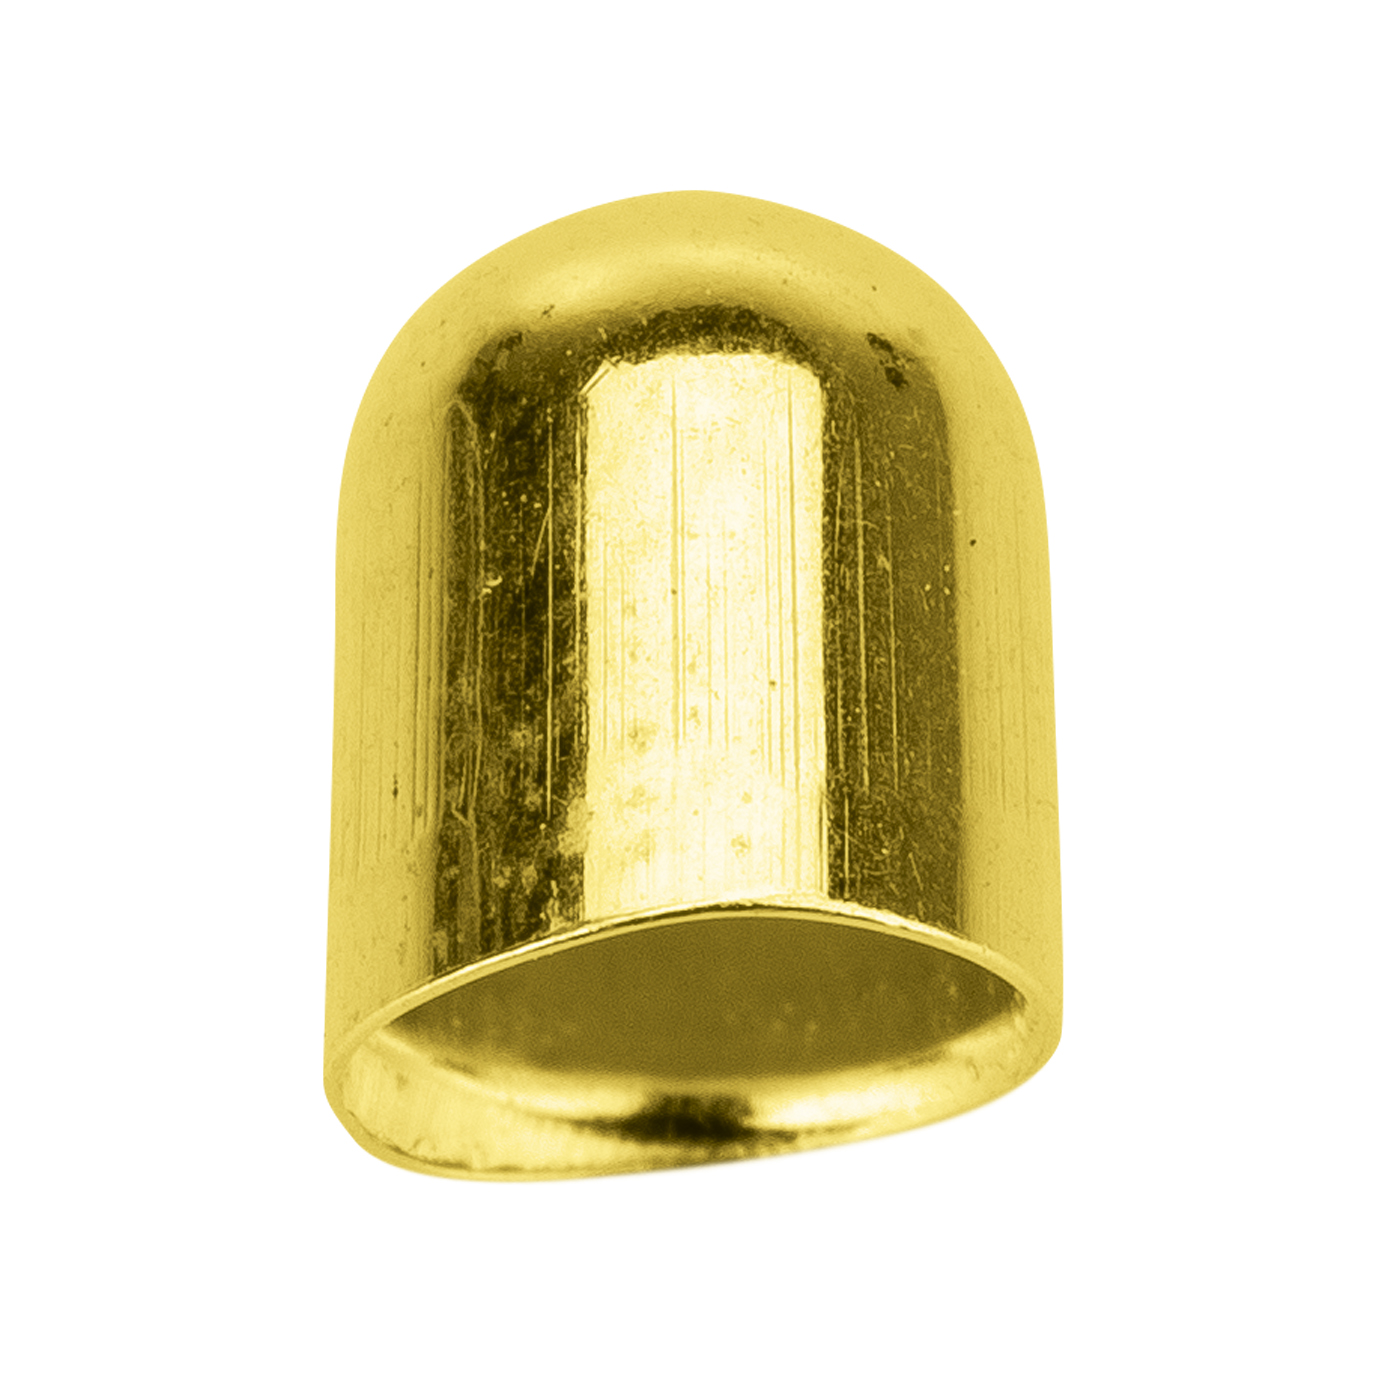 Endkappe, 925 Ag vergoldet, ø 3,2 mm, ohne Öse - 1 Stück